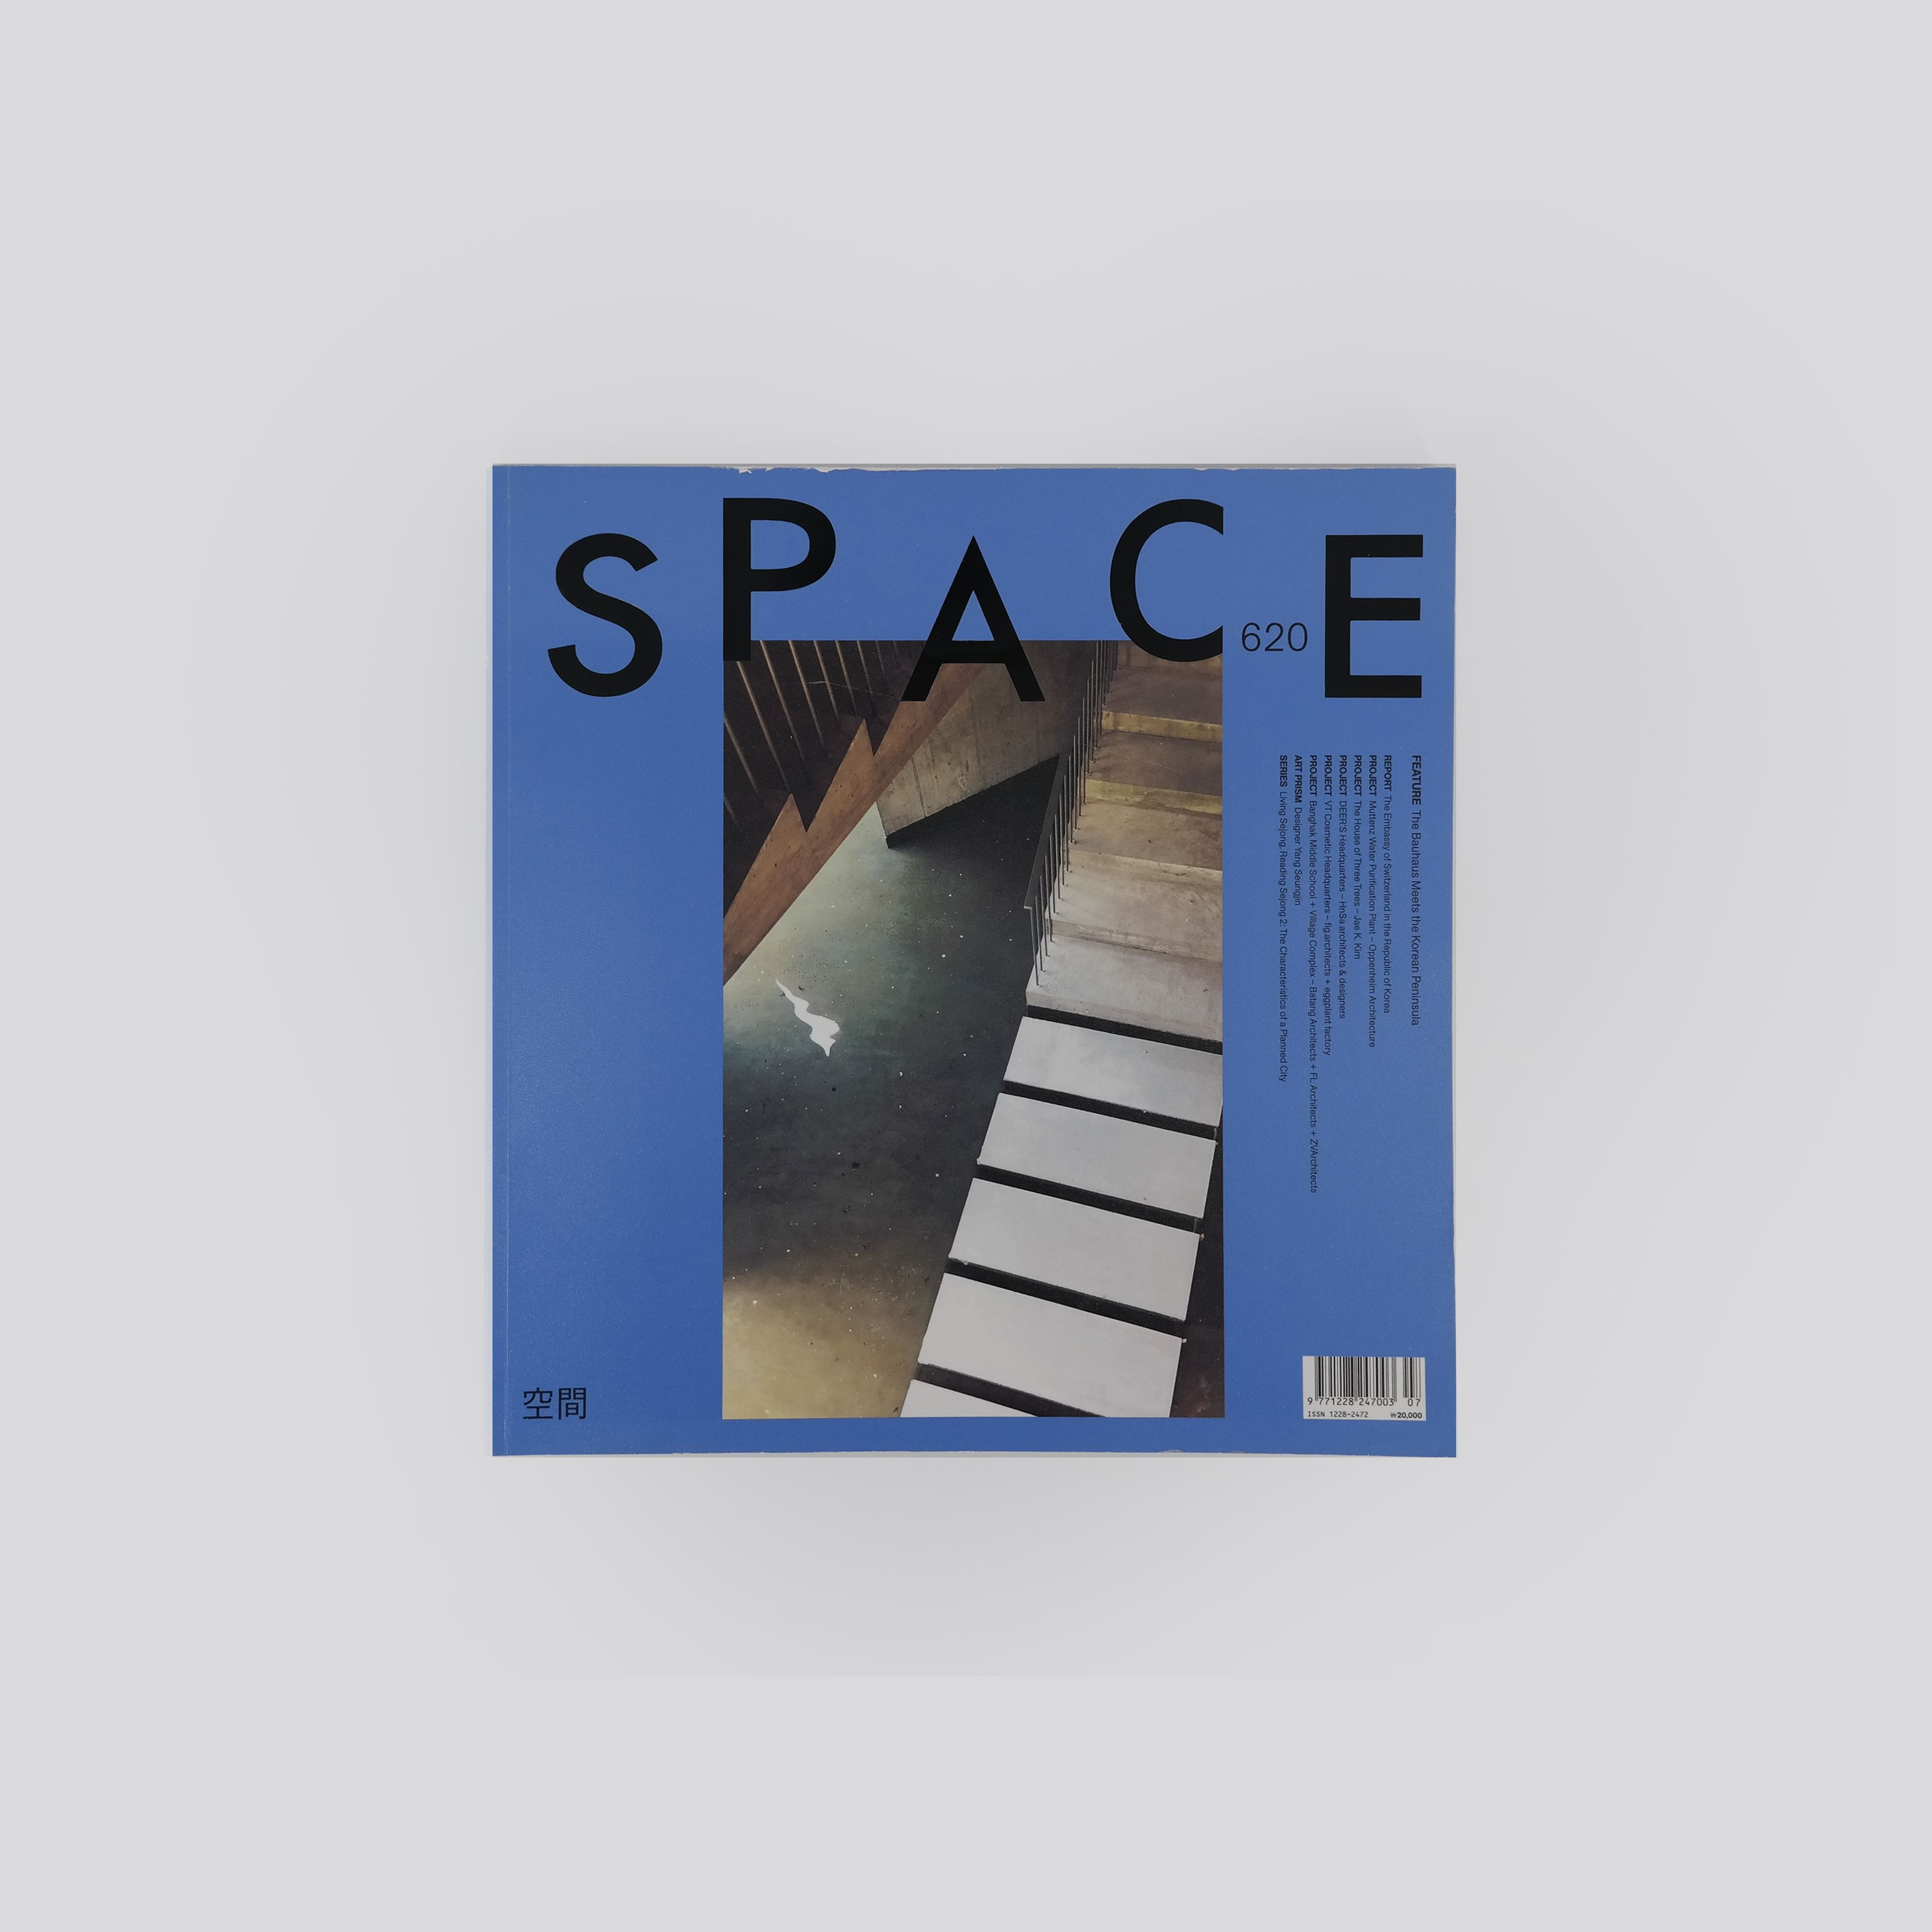 Space Magazine, No. 620